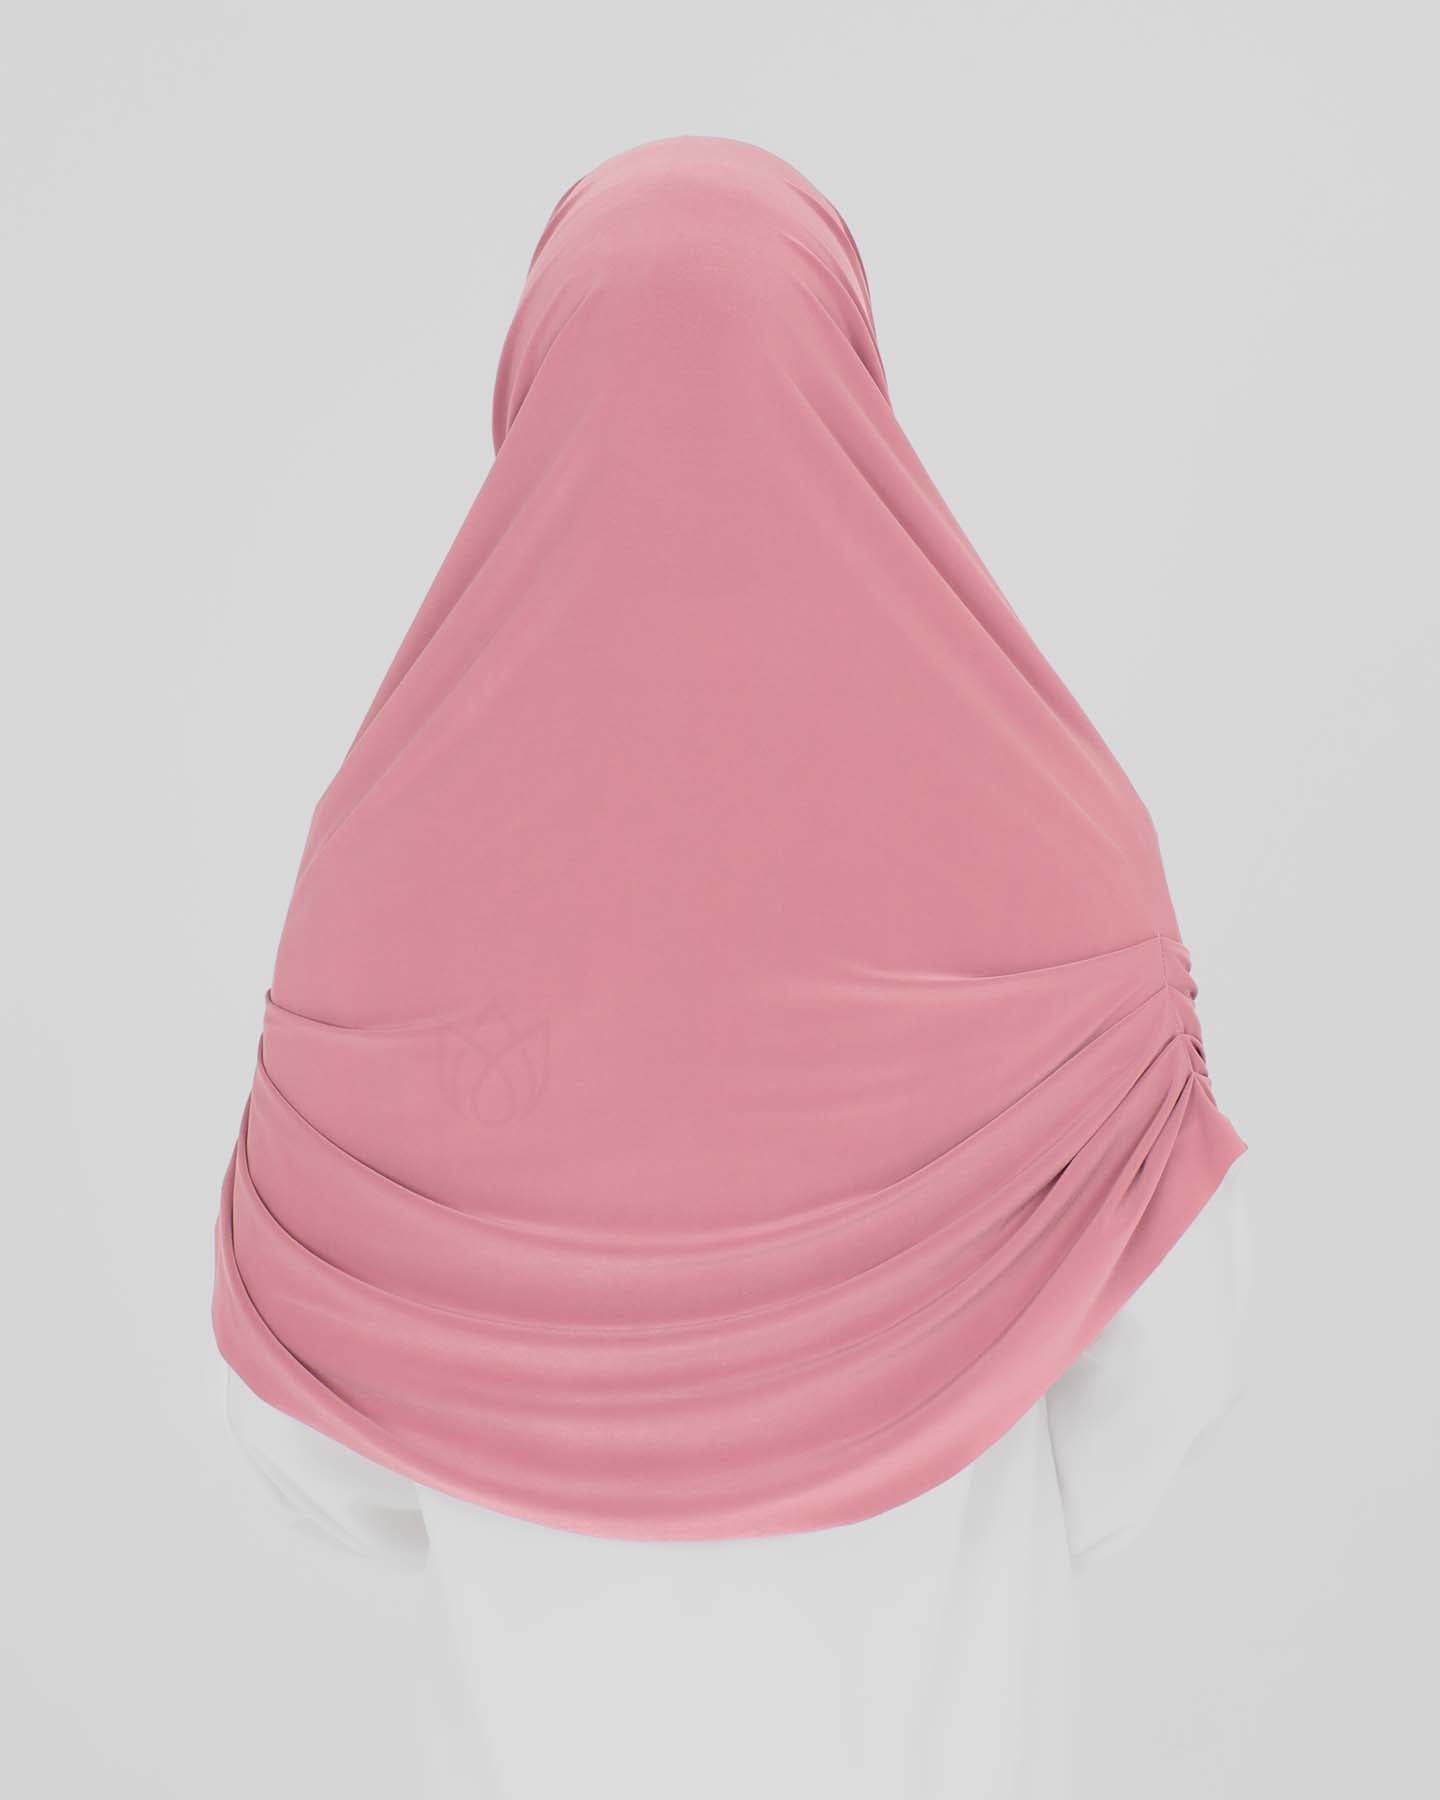 Hijab - Al Amira cross with cap - Pink